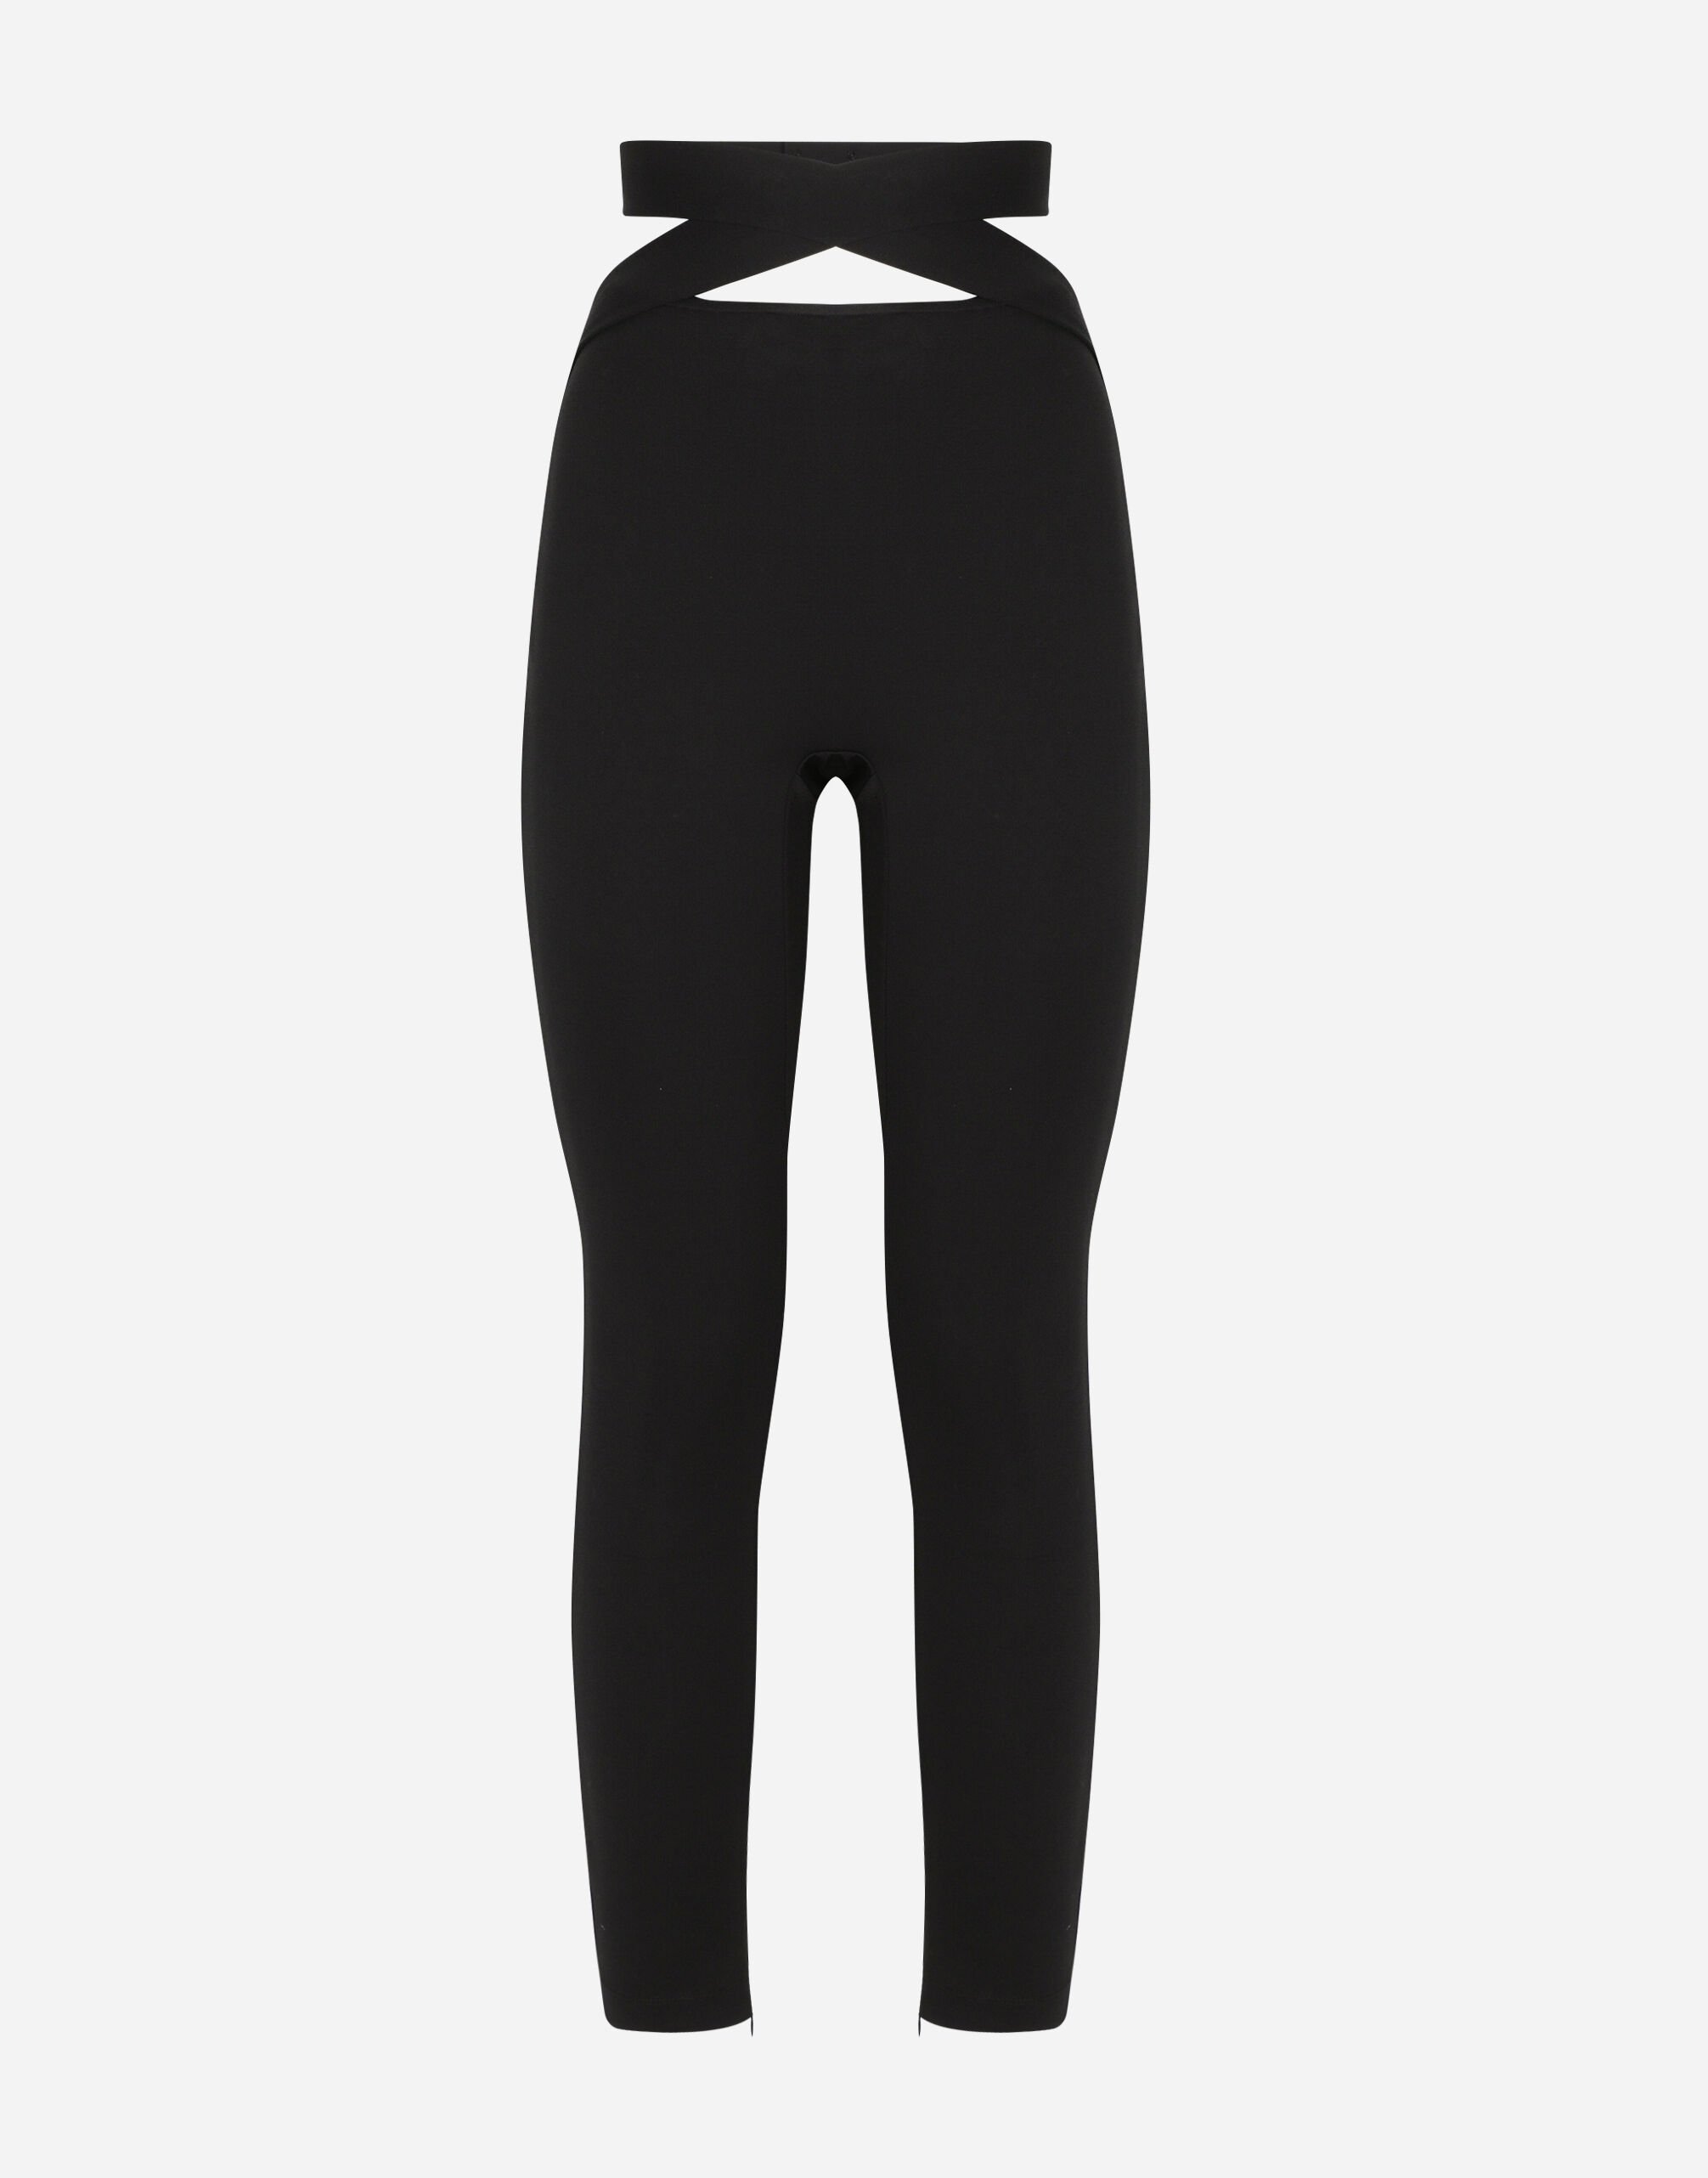 Dolce & Gabbana Viscose pants with strap detail Black FTCHMTFURJL